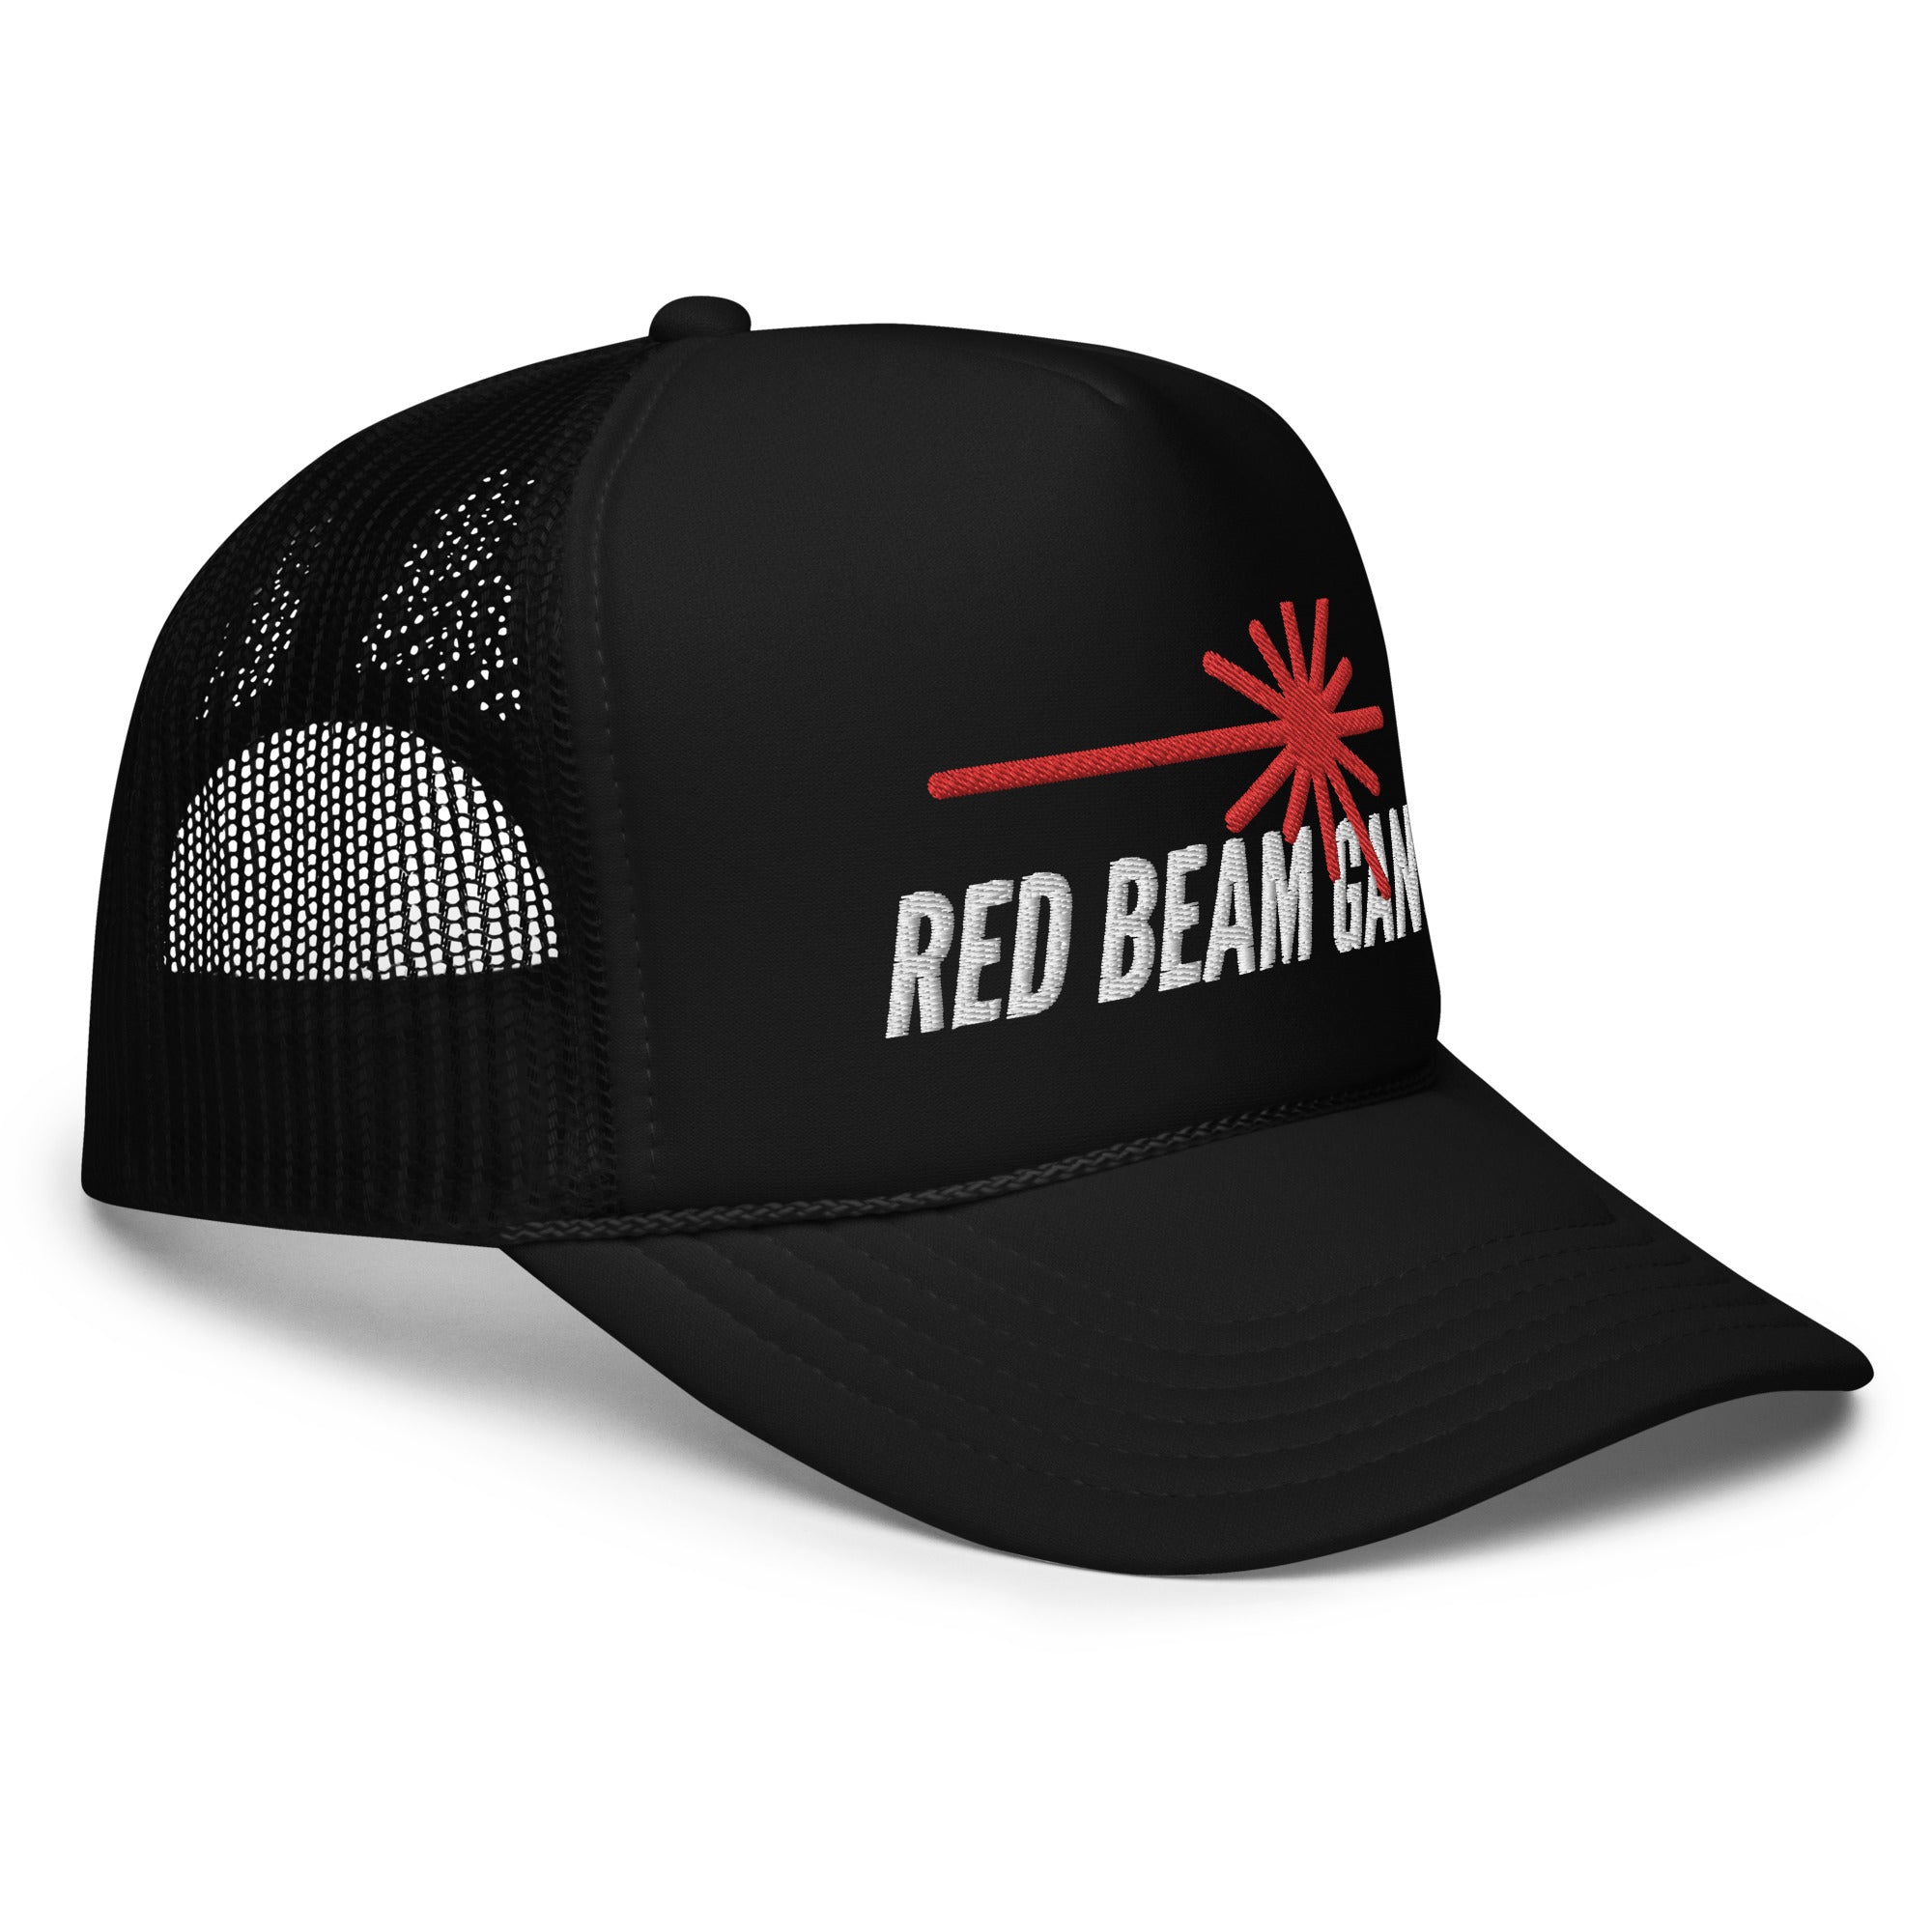 Red Beam Gang Foam trucker hat